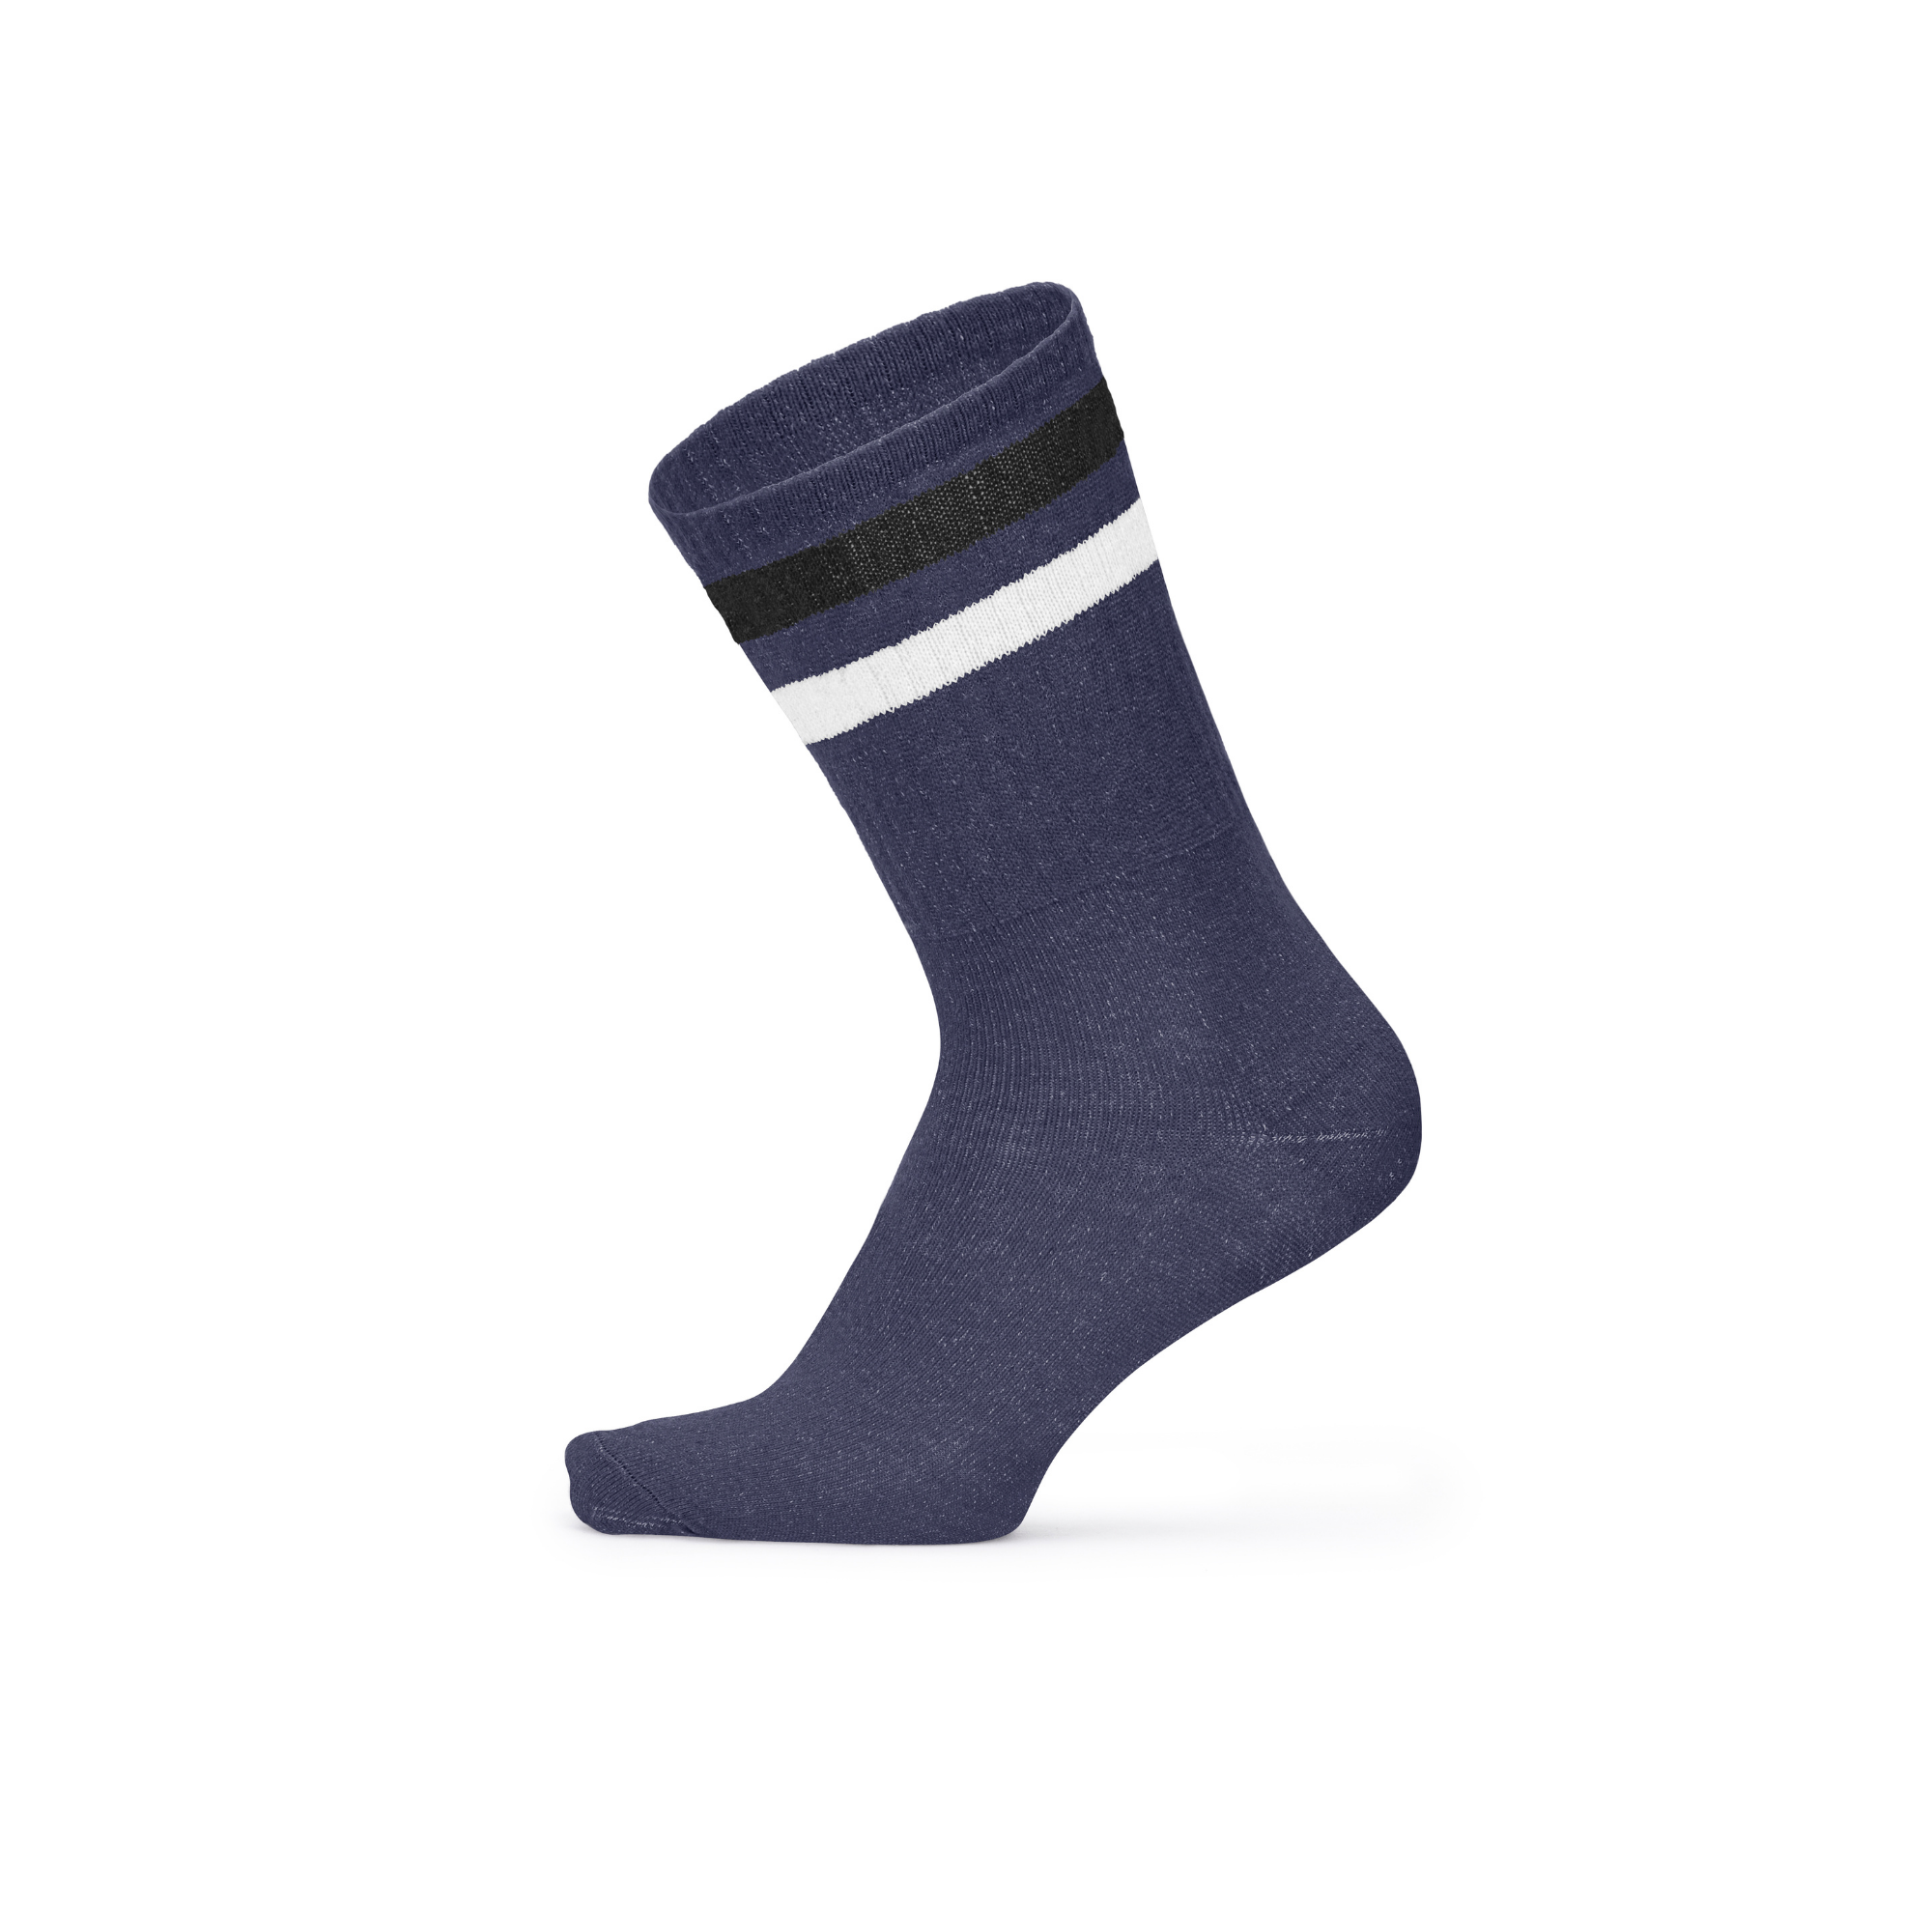 2 Stripe Dark Blue Colour Tennis Socks